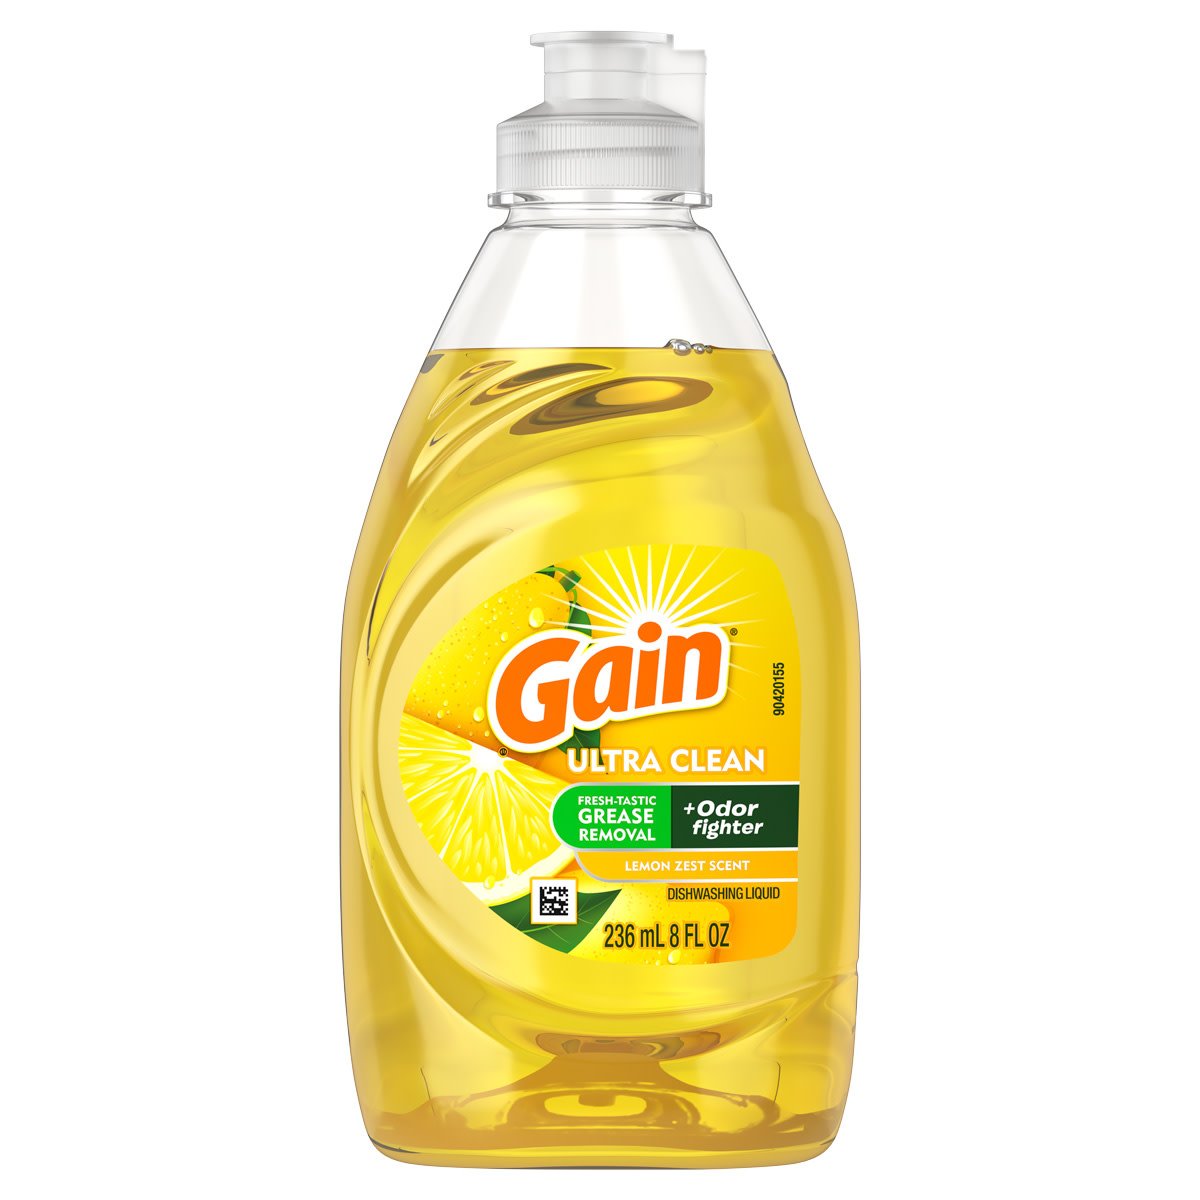 Gain - Ultra Dishwashing Liquid Dish Soap, Lemon Zest Scent, 8oz - Case of 12